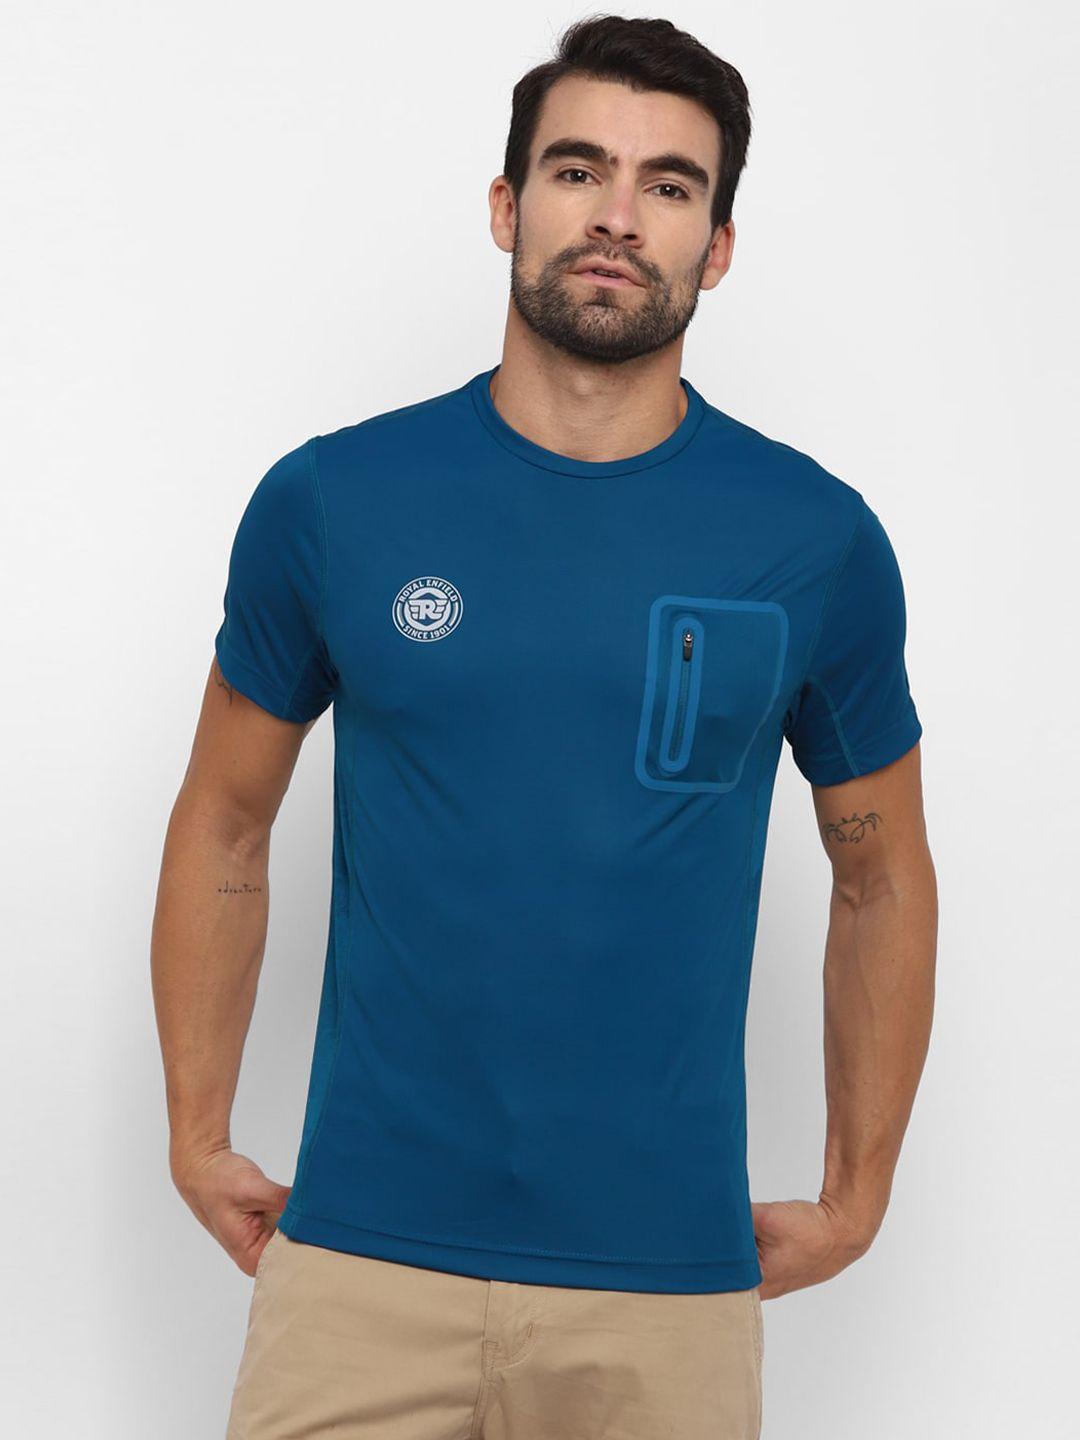 royal enfield men teal blue brand logo printed t-shirt